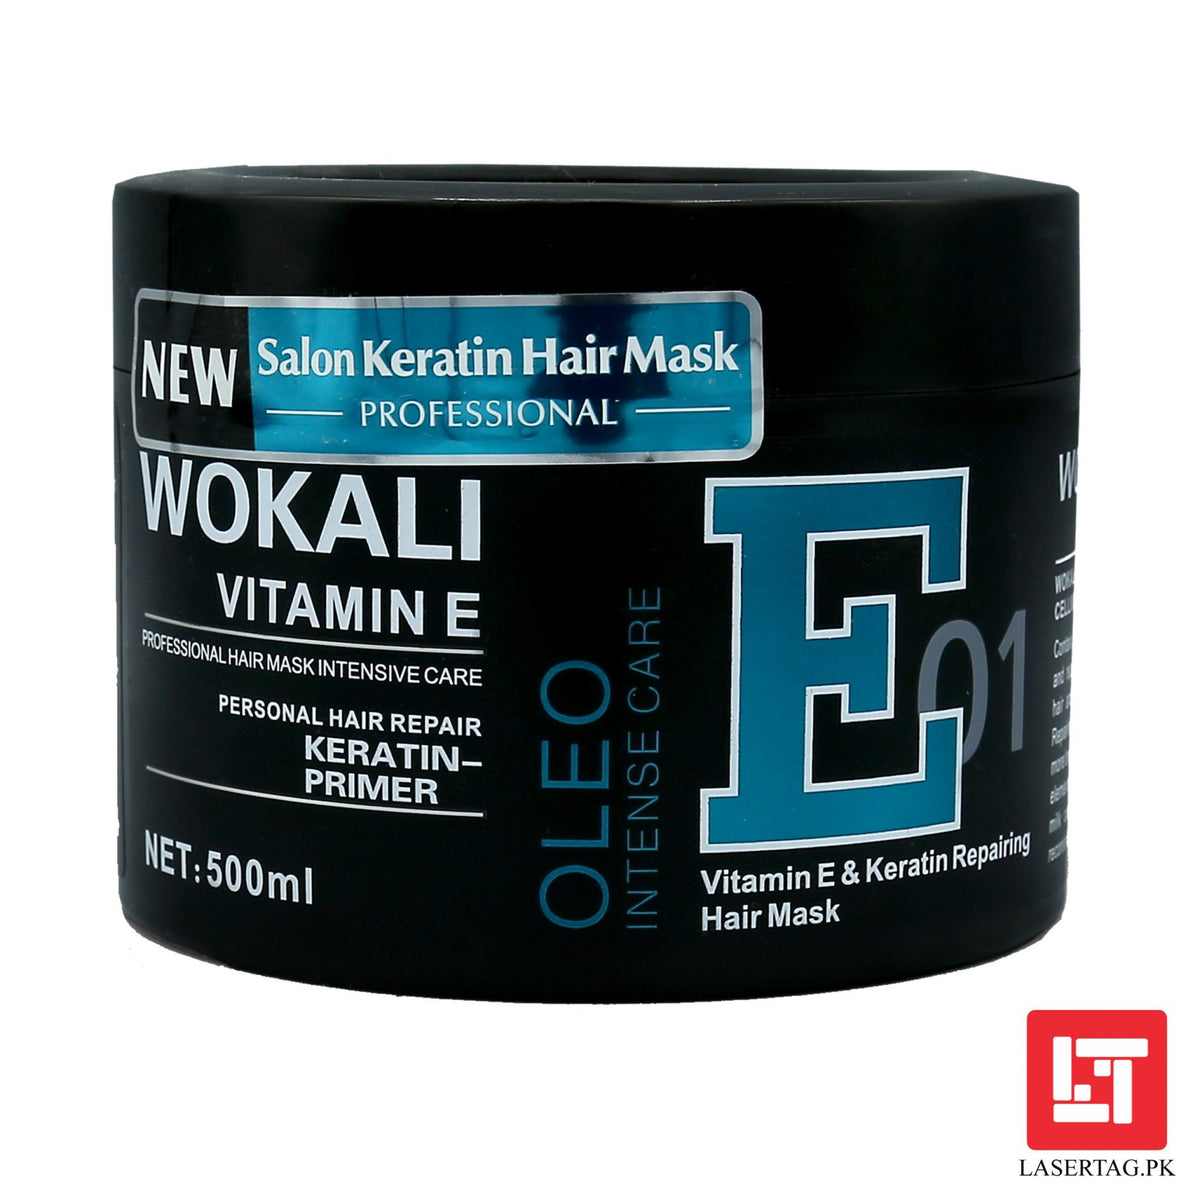 Wokali Hair Mask Vitamin E Oleo Intense Care Keratin Primer Blue 500g freeshipping - lasertag.pk